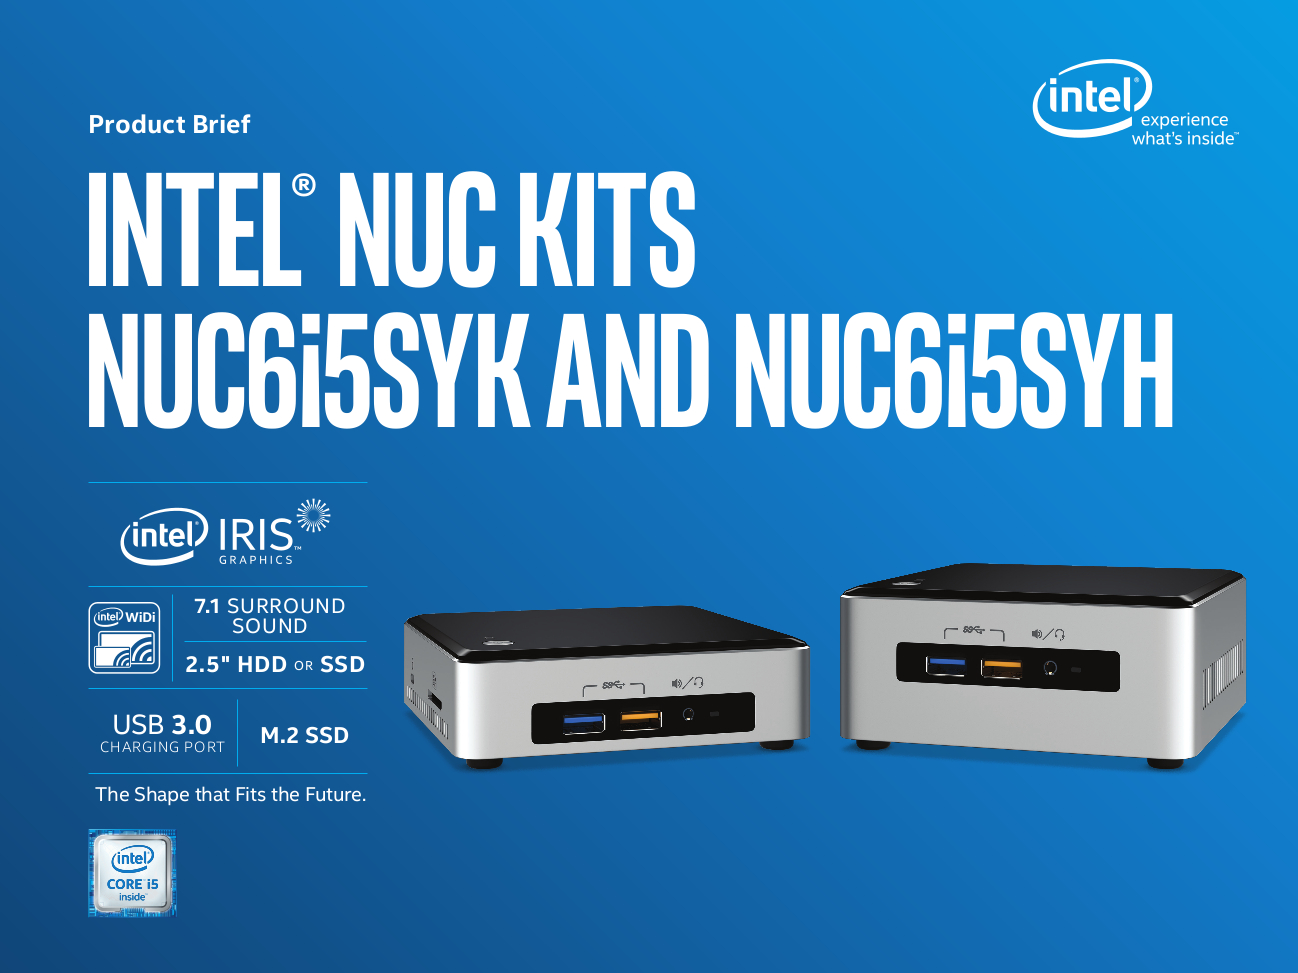 Intel updates the NUC with latest Intel Skylake processor 35